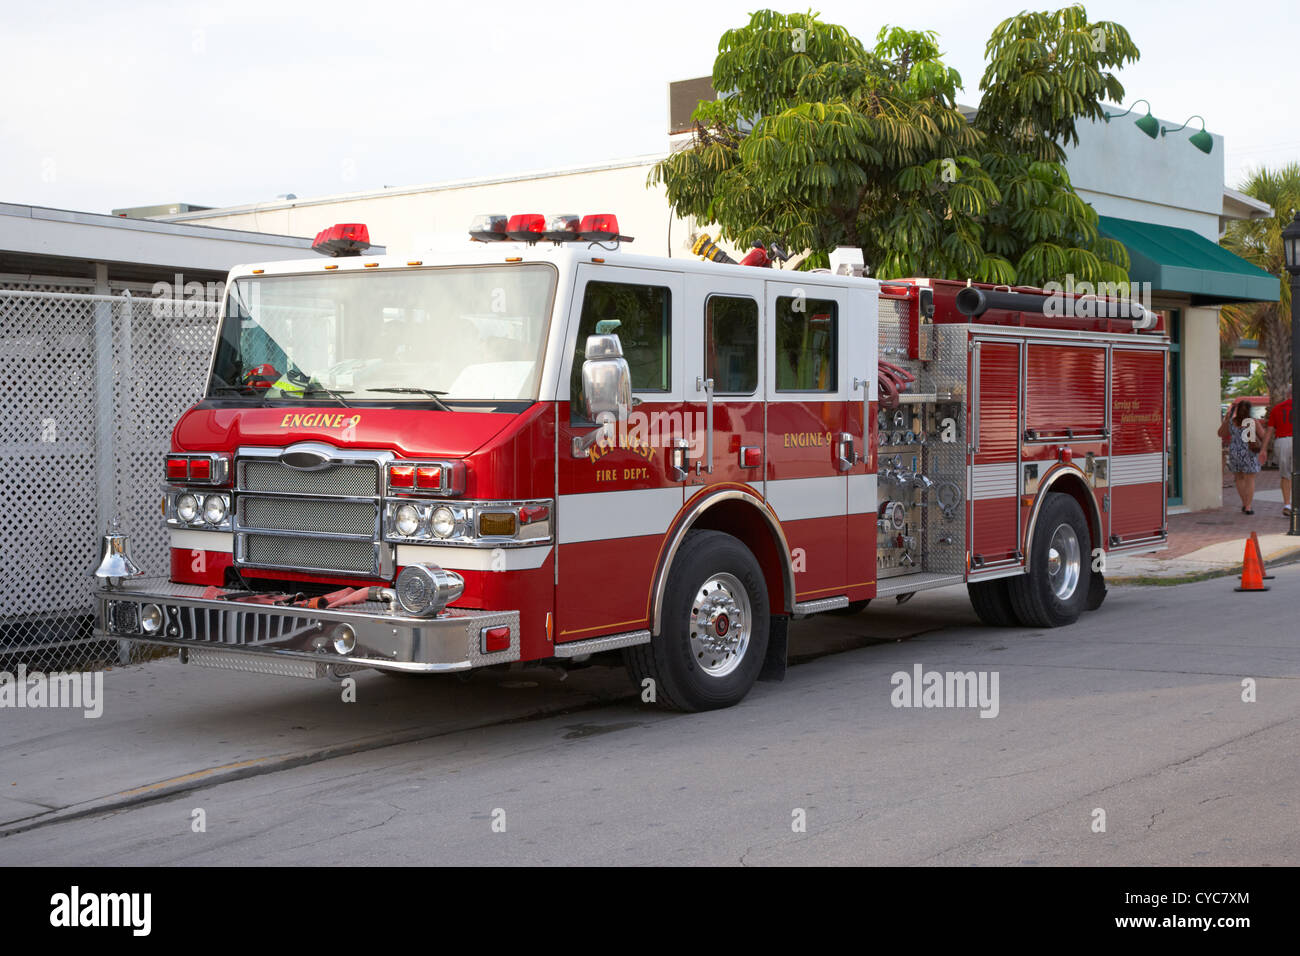 Key West Fire Dept Motor Fahrzeug Florida usa Stockfoto